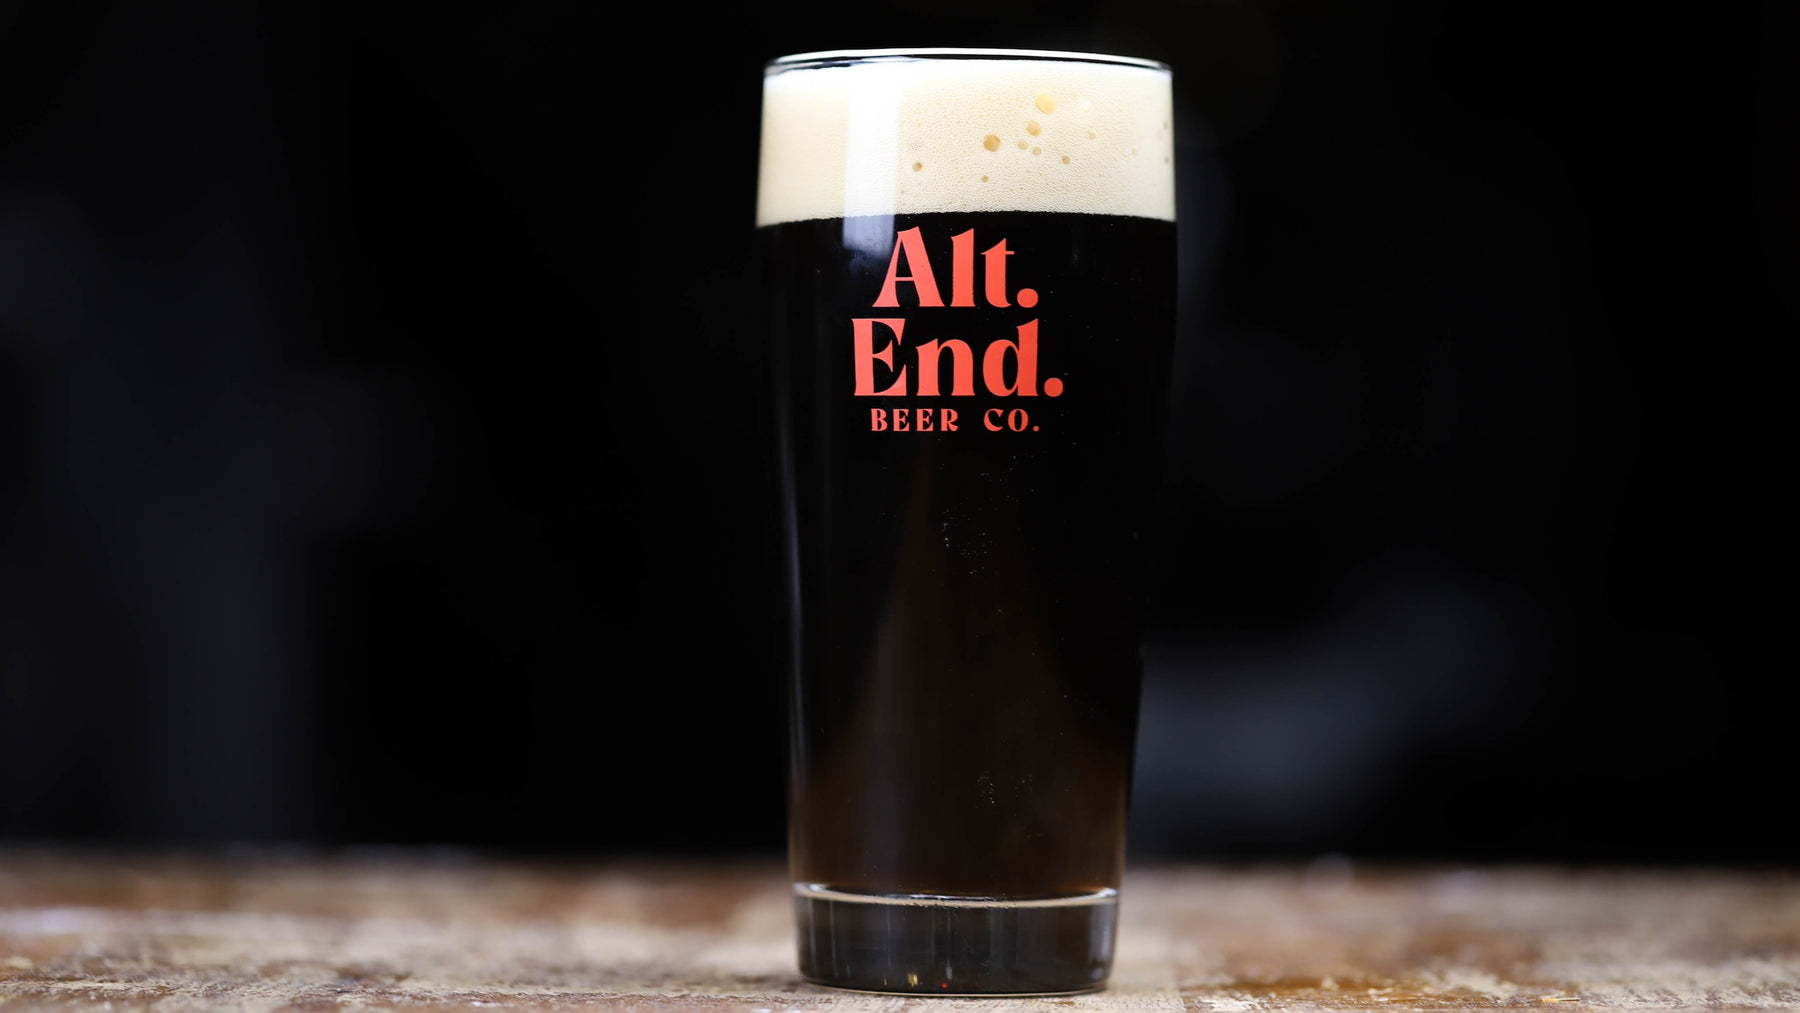 Alternate Ending Beer Co. BBA You Got Smoked Barrel-aged Rauchbier 5.1%